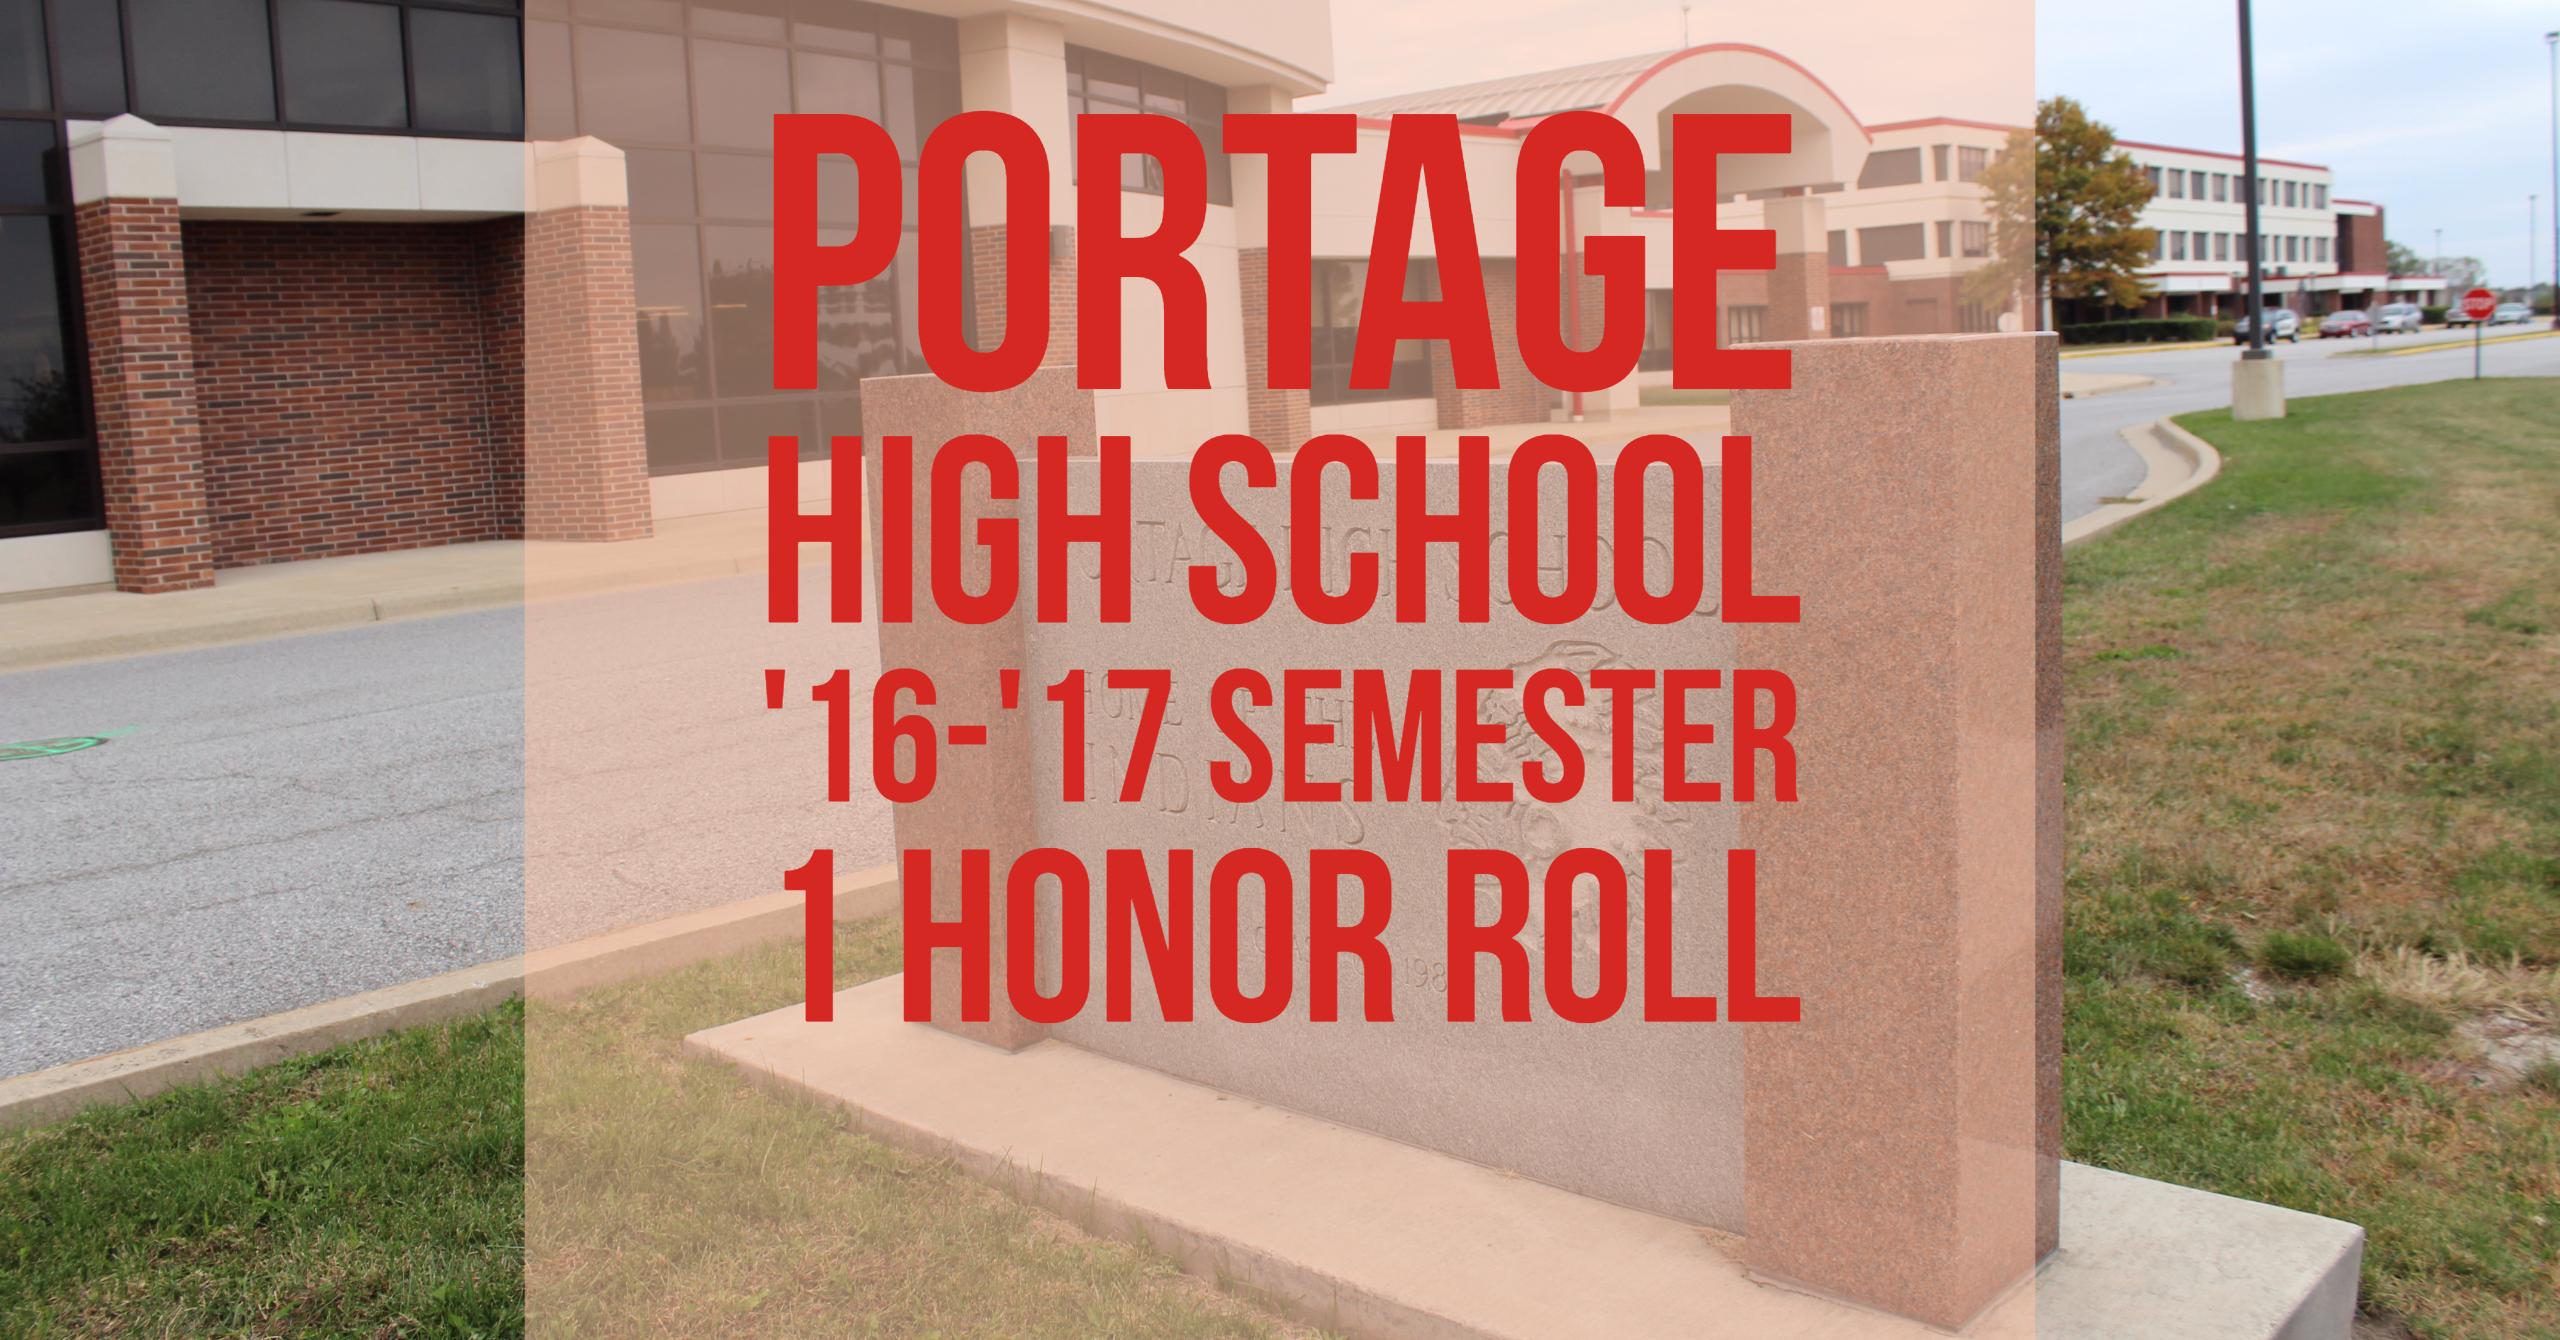 Portage High School Announces 2016-2017 Semester 1 Honor Roll